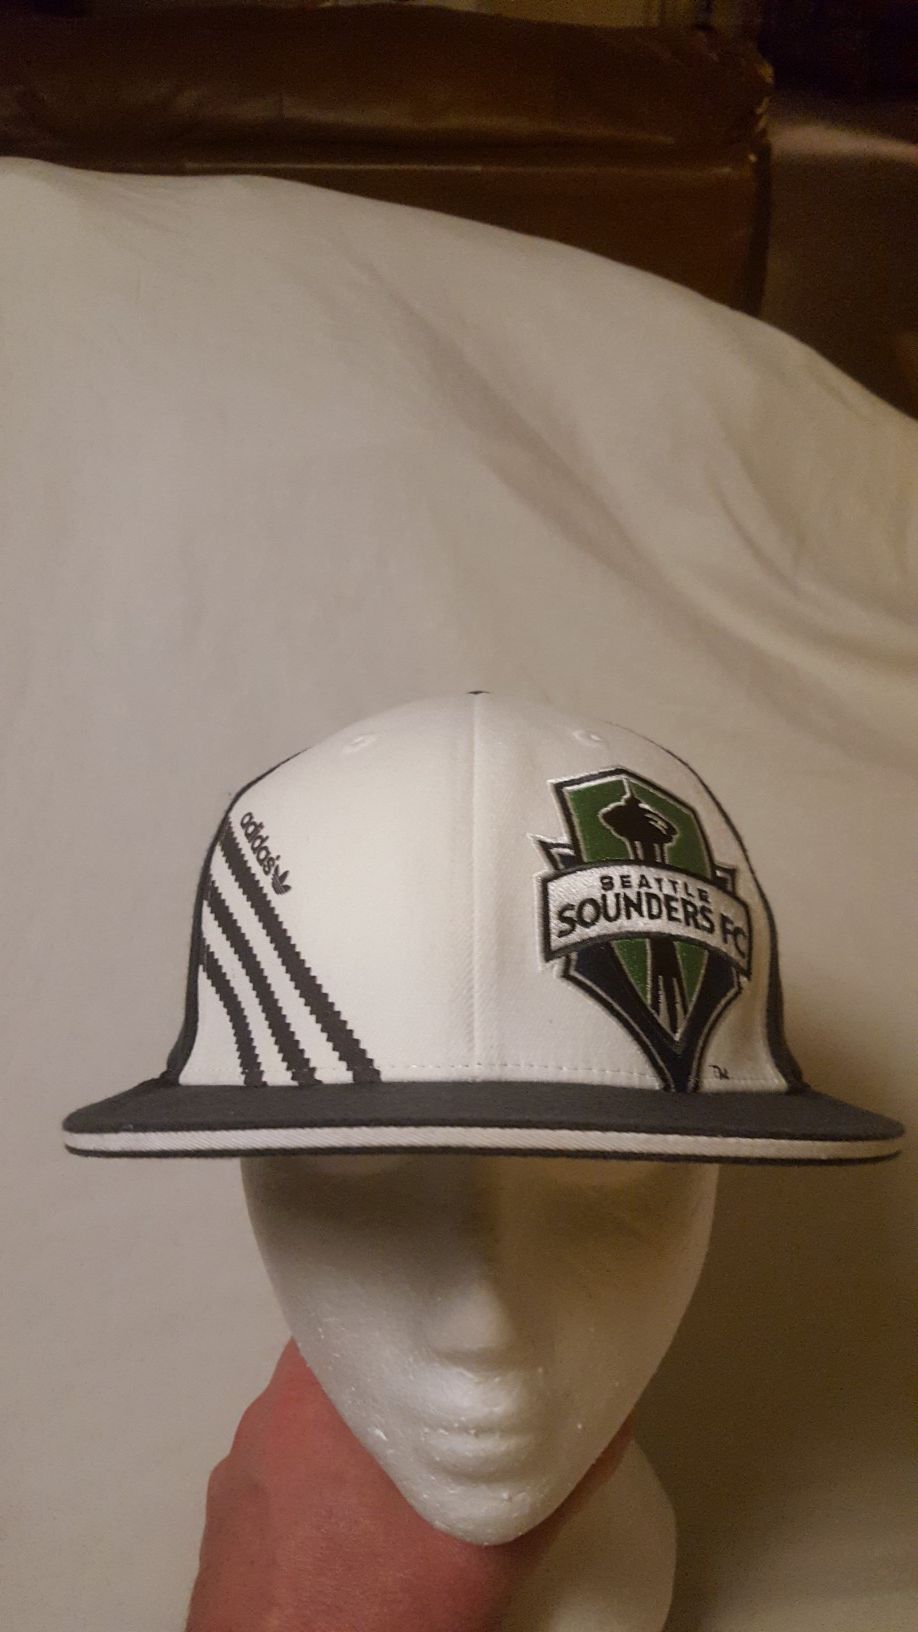 Seattle Sounders FC Soccer hat Adidas Flex fit style size S/M